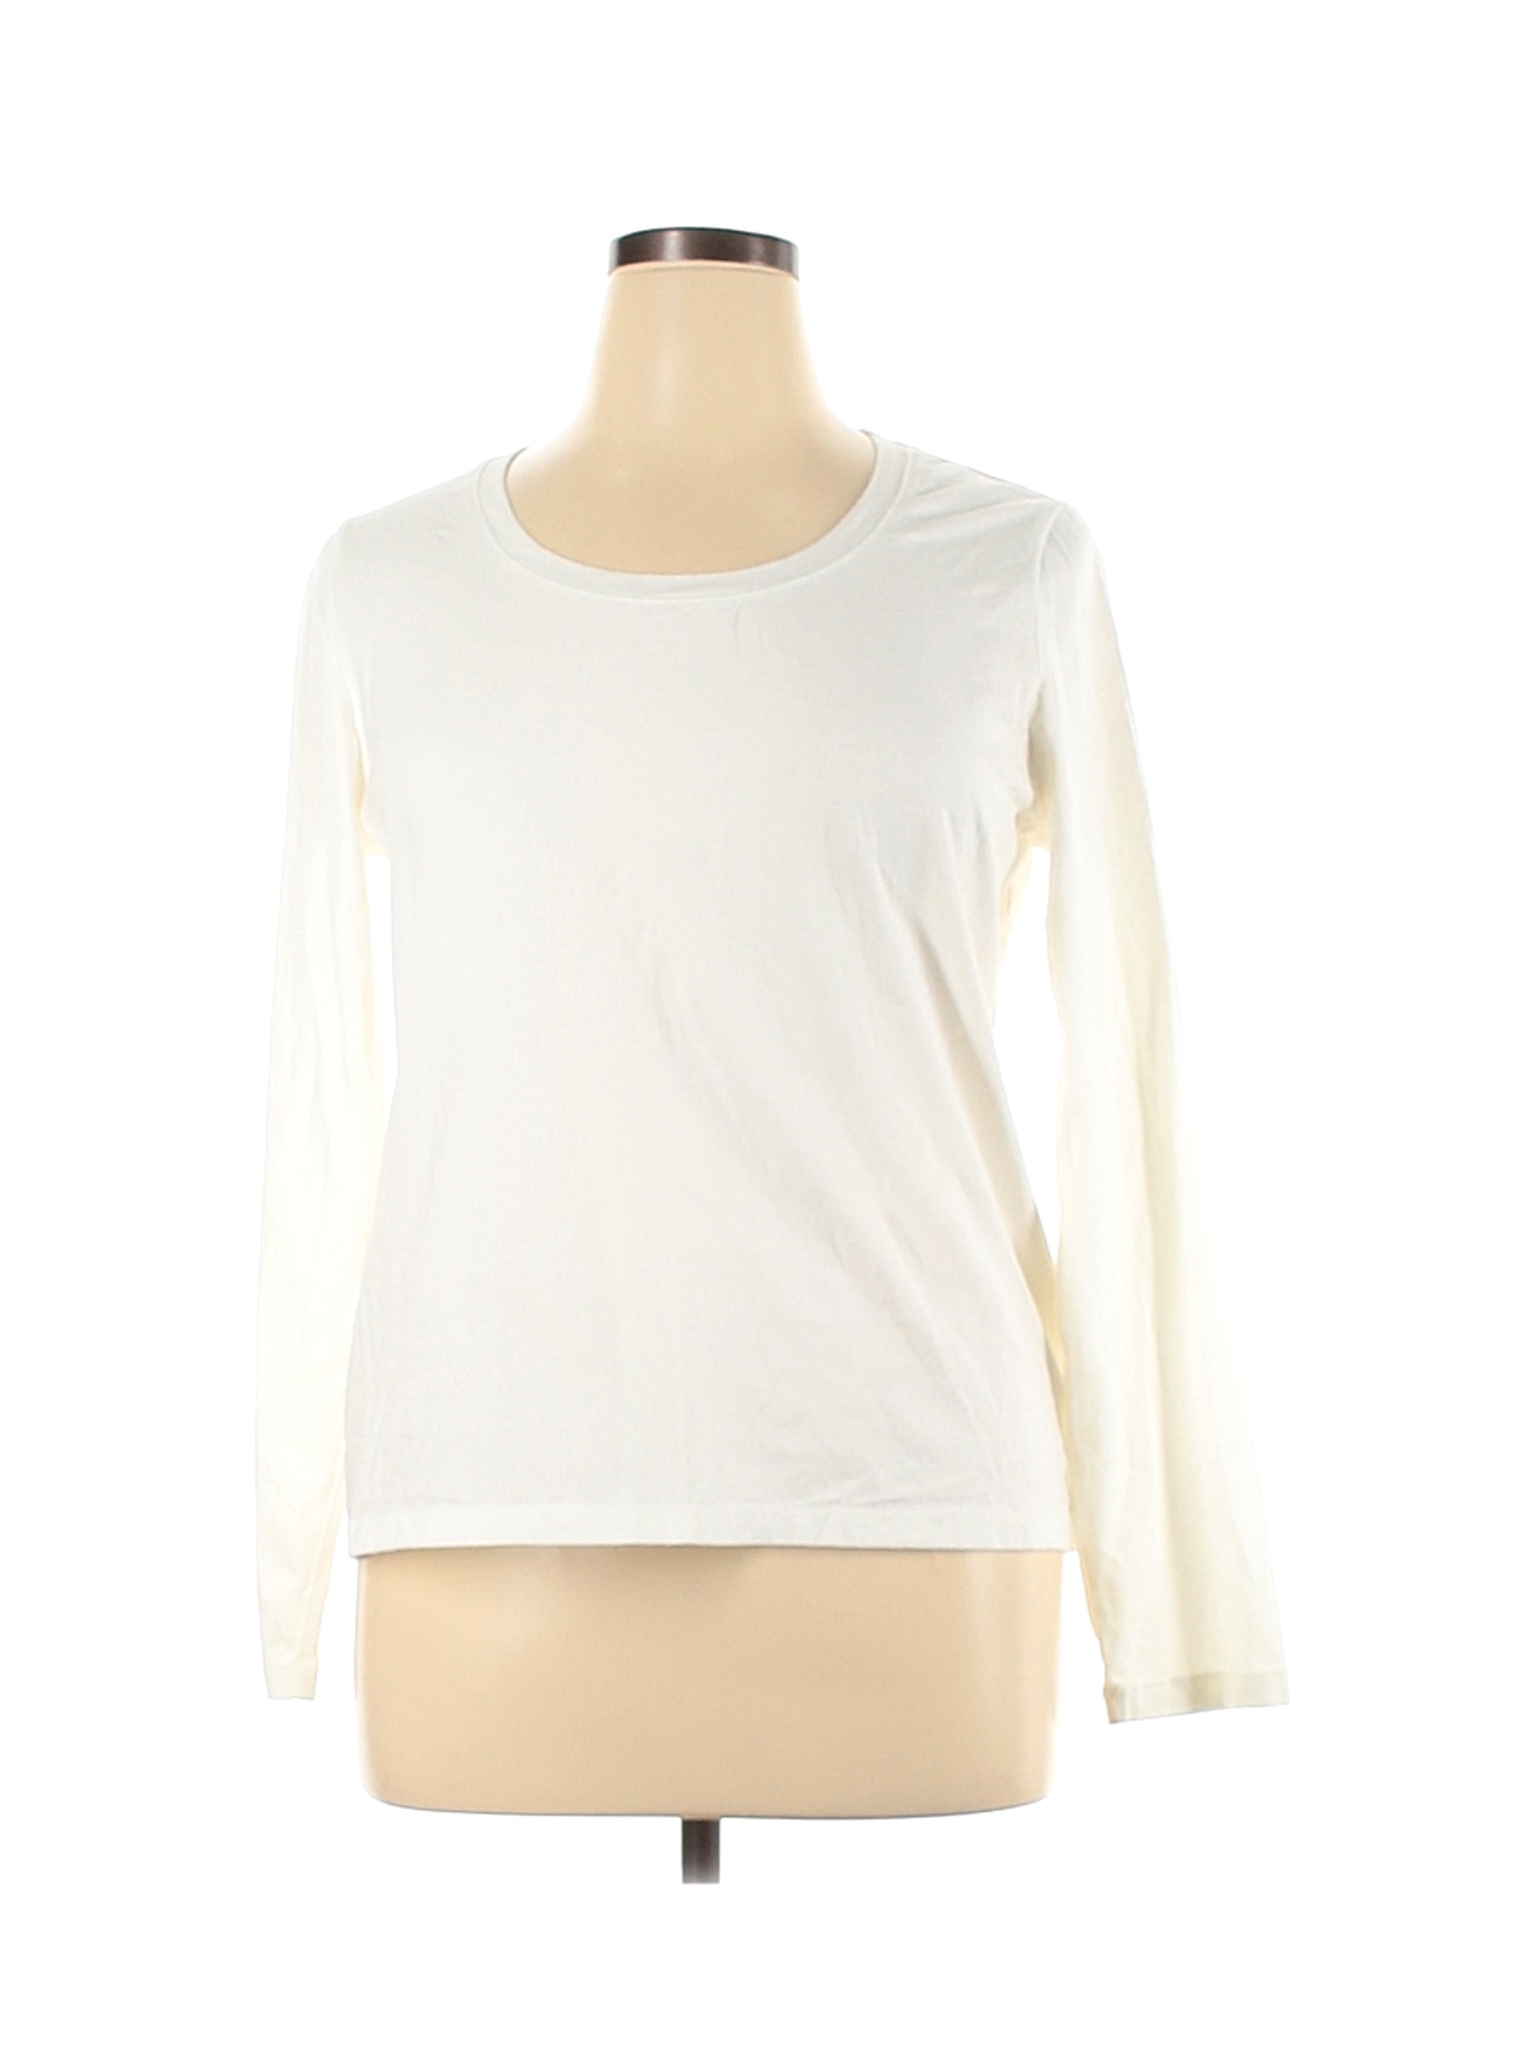 SONOMA life + style Women White Long Sleeve T-Shirt XL | eBay